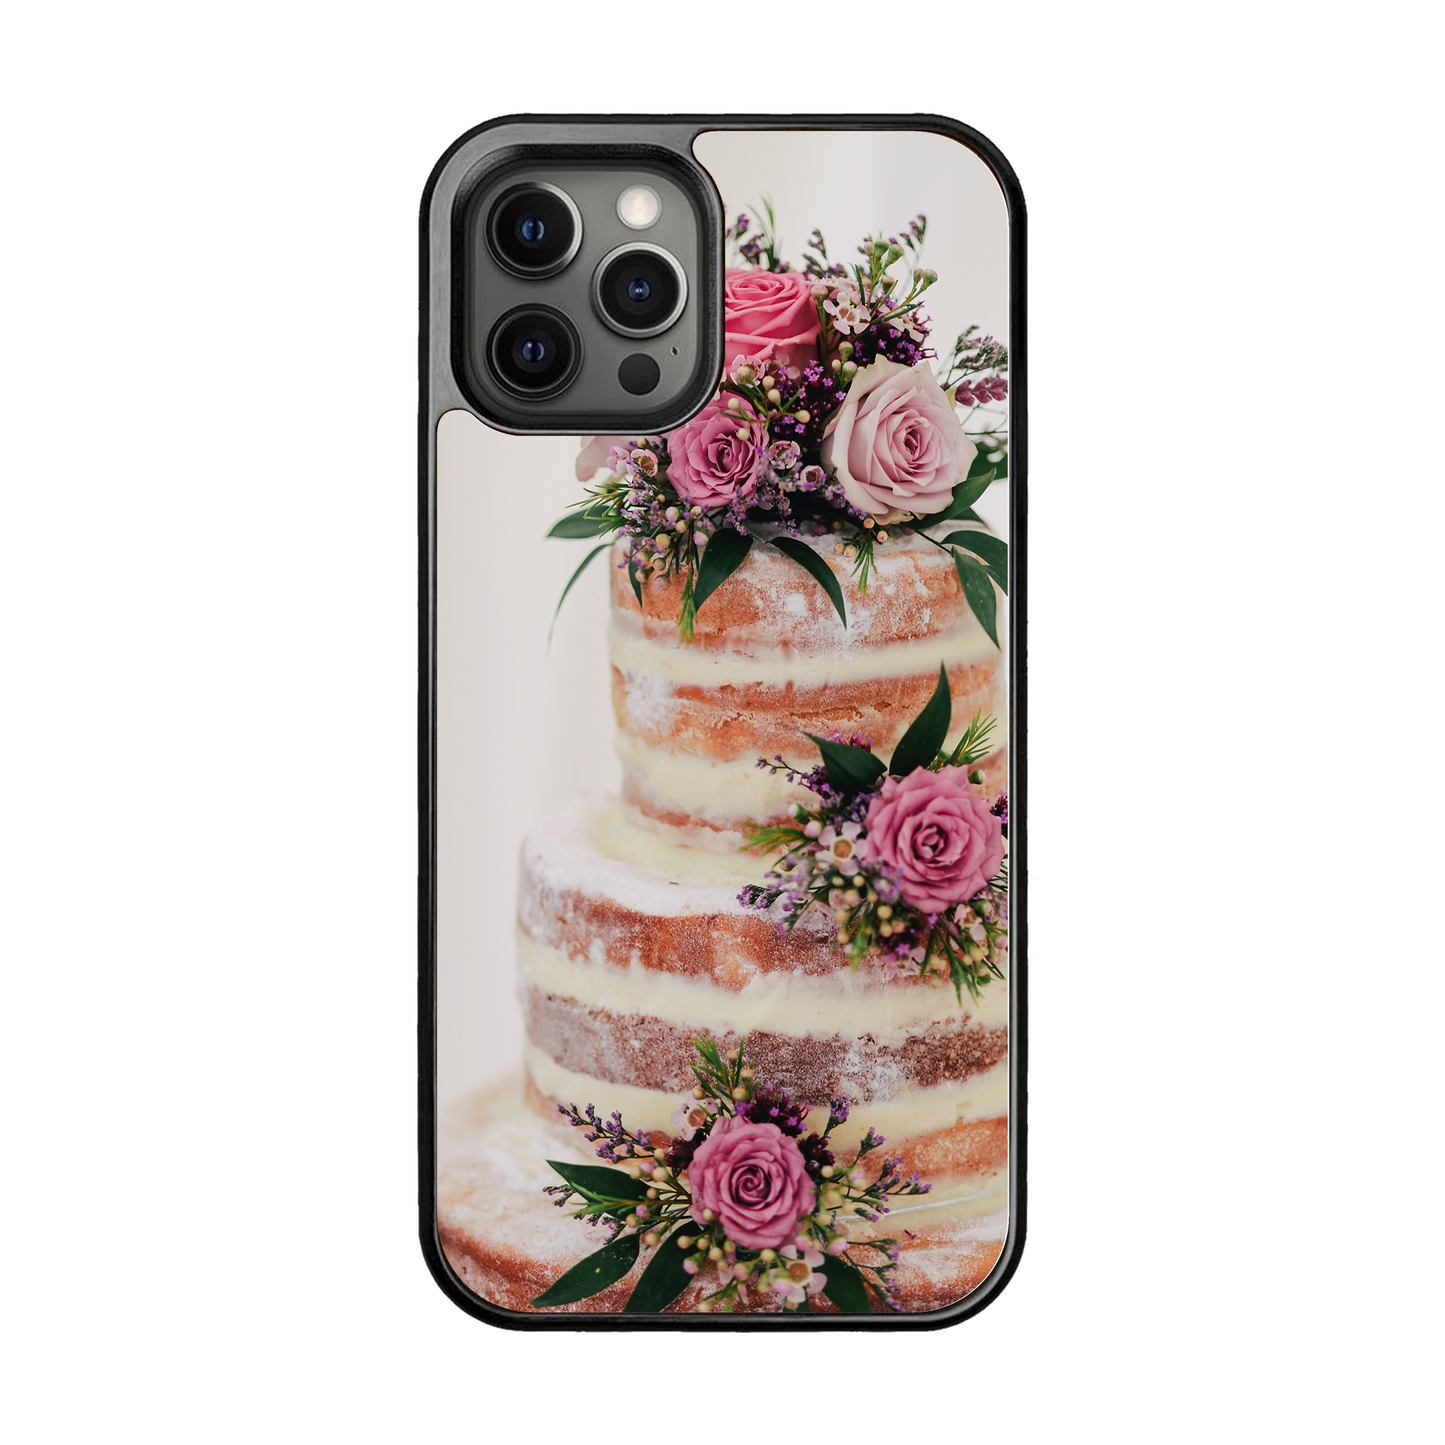 Wedding Cake Phone Case